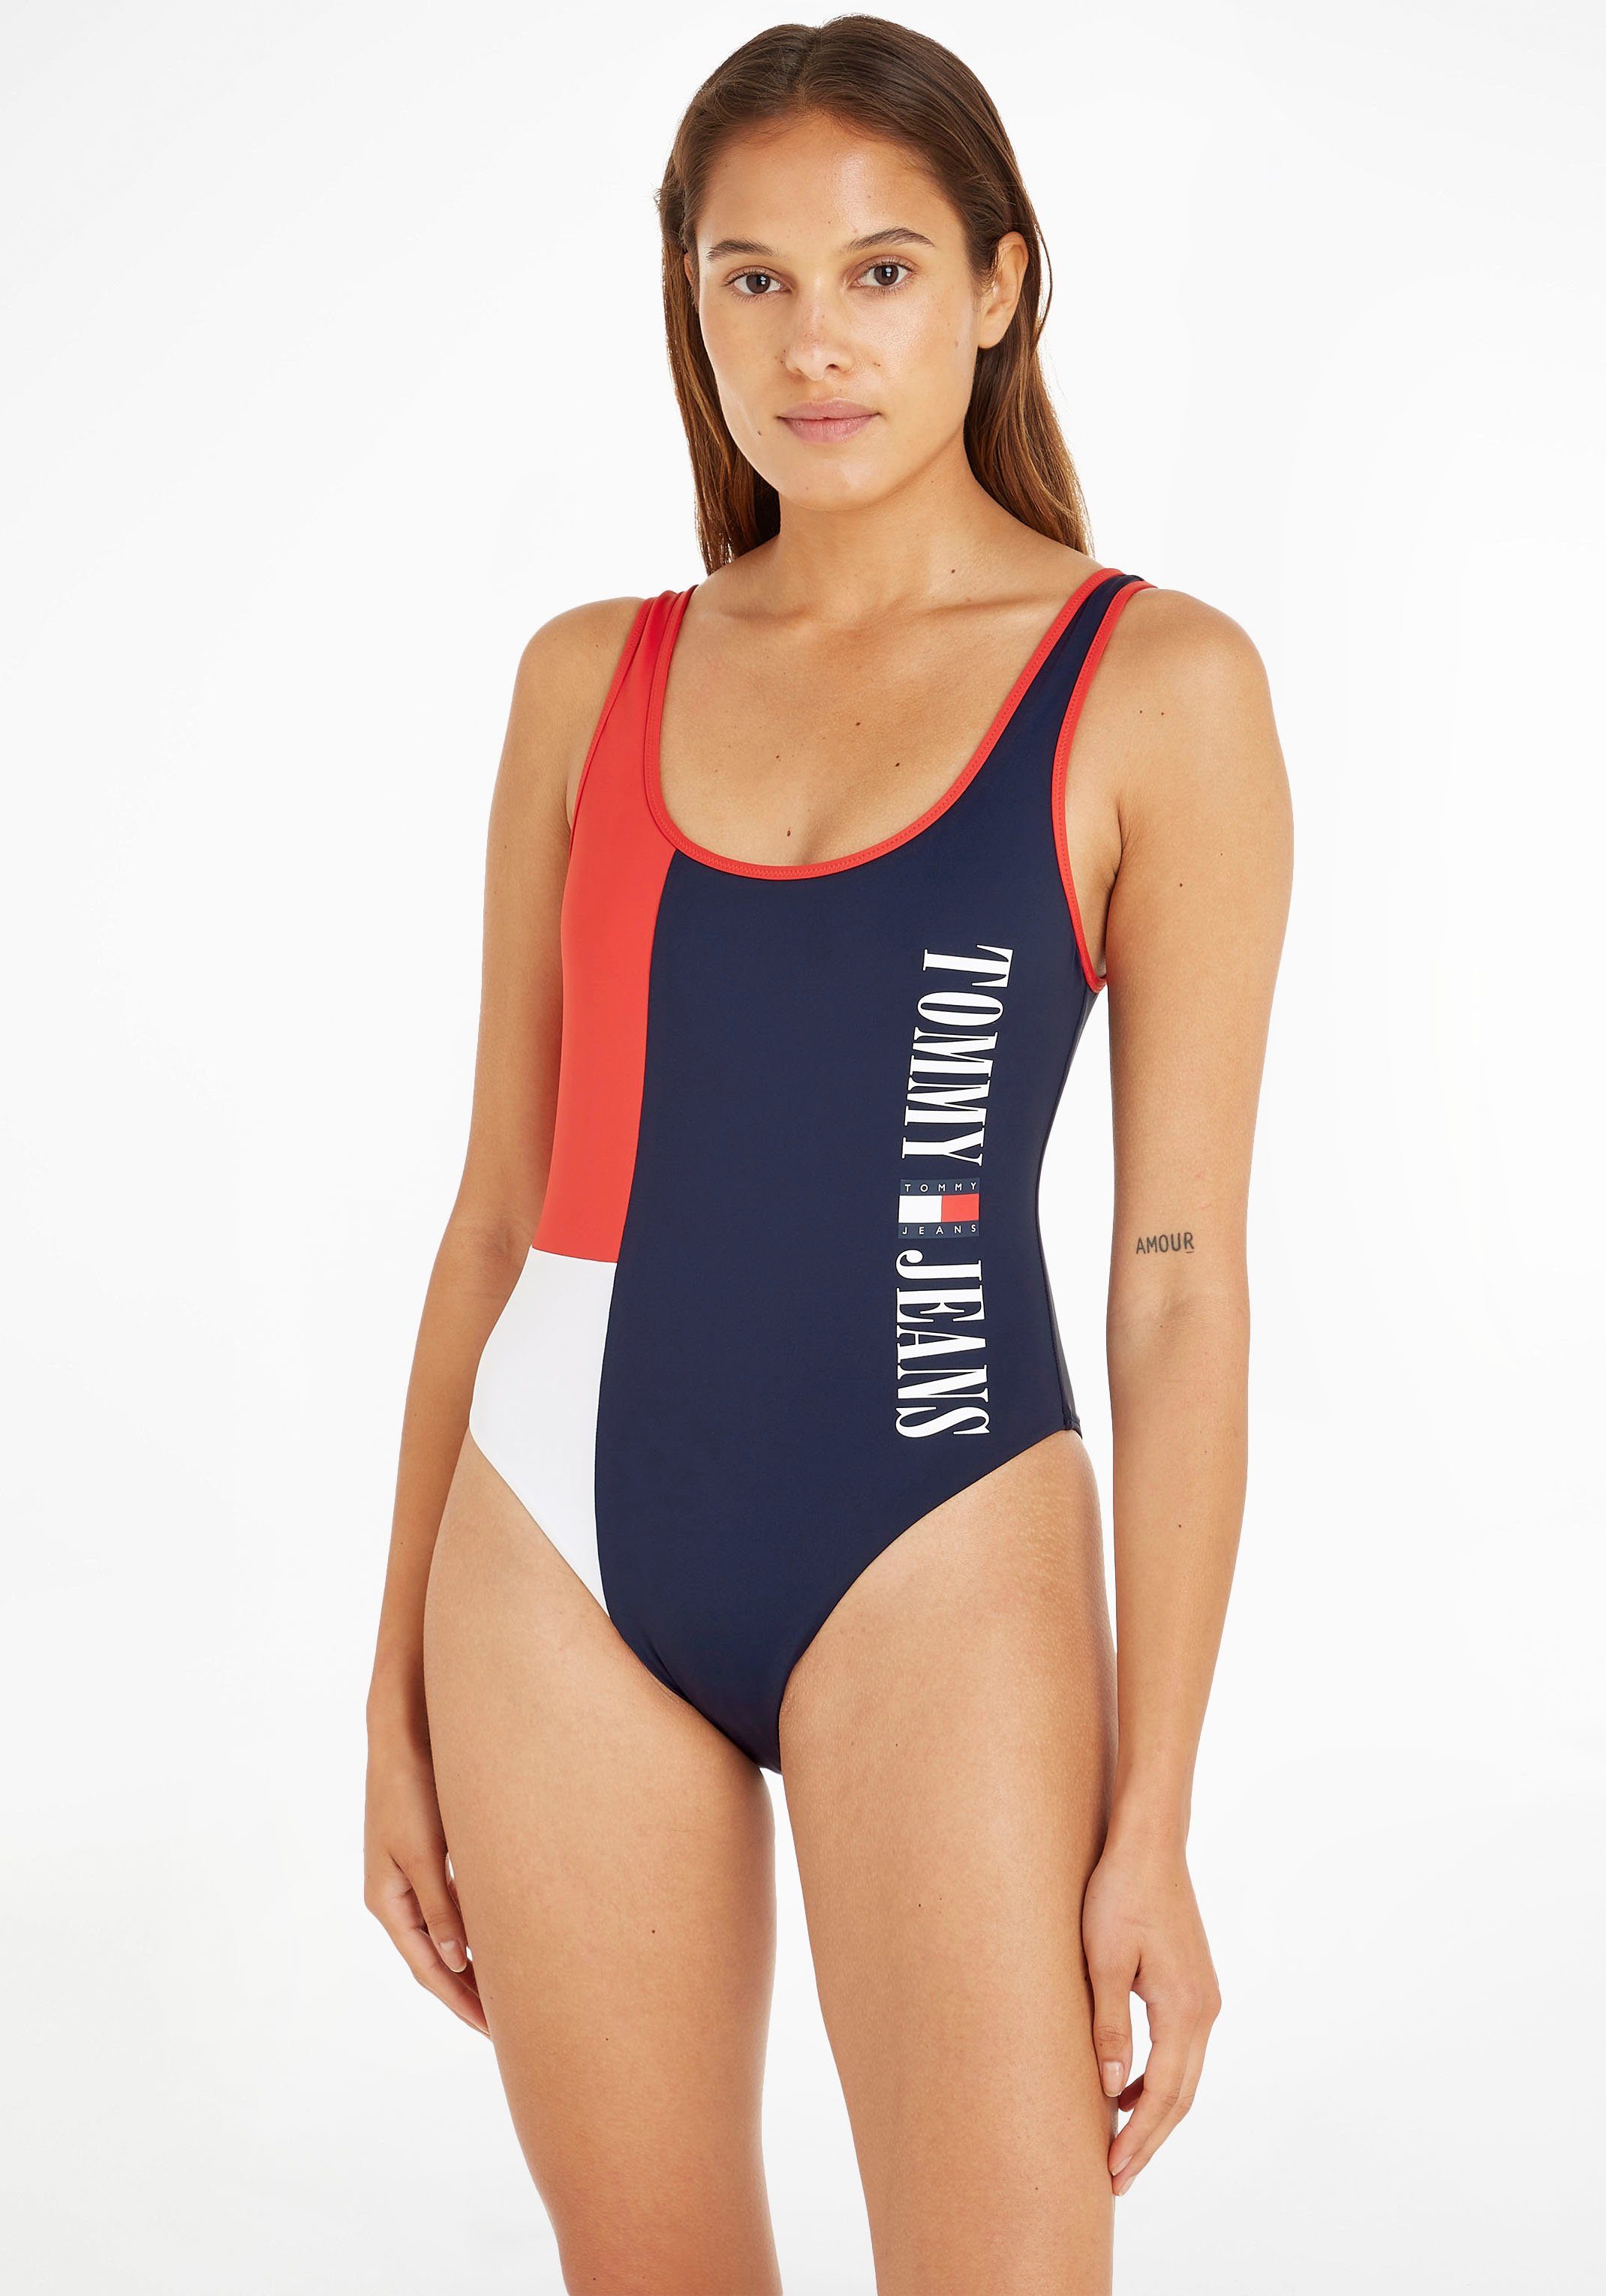 Meetbaar Teleurgesteld Onafhankelijk Tommy Hilfiger Swimwear Badpak TH ONE PIECE RUNWAY (EXT SIZES) Met Tommy  Hilfiger-branding snel online gekocht | OTTO